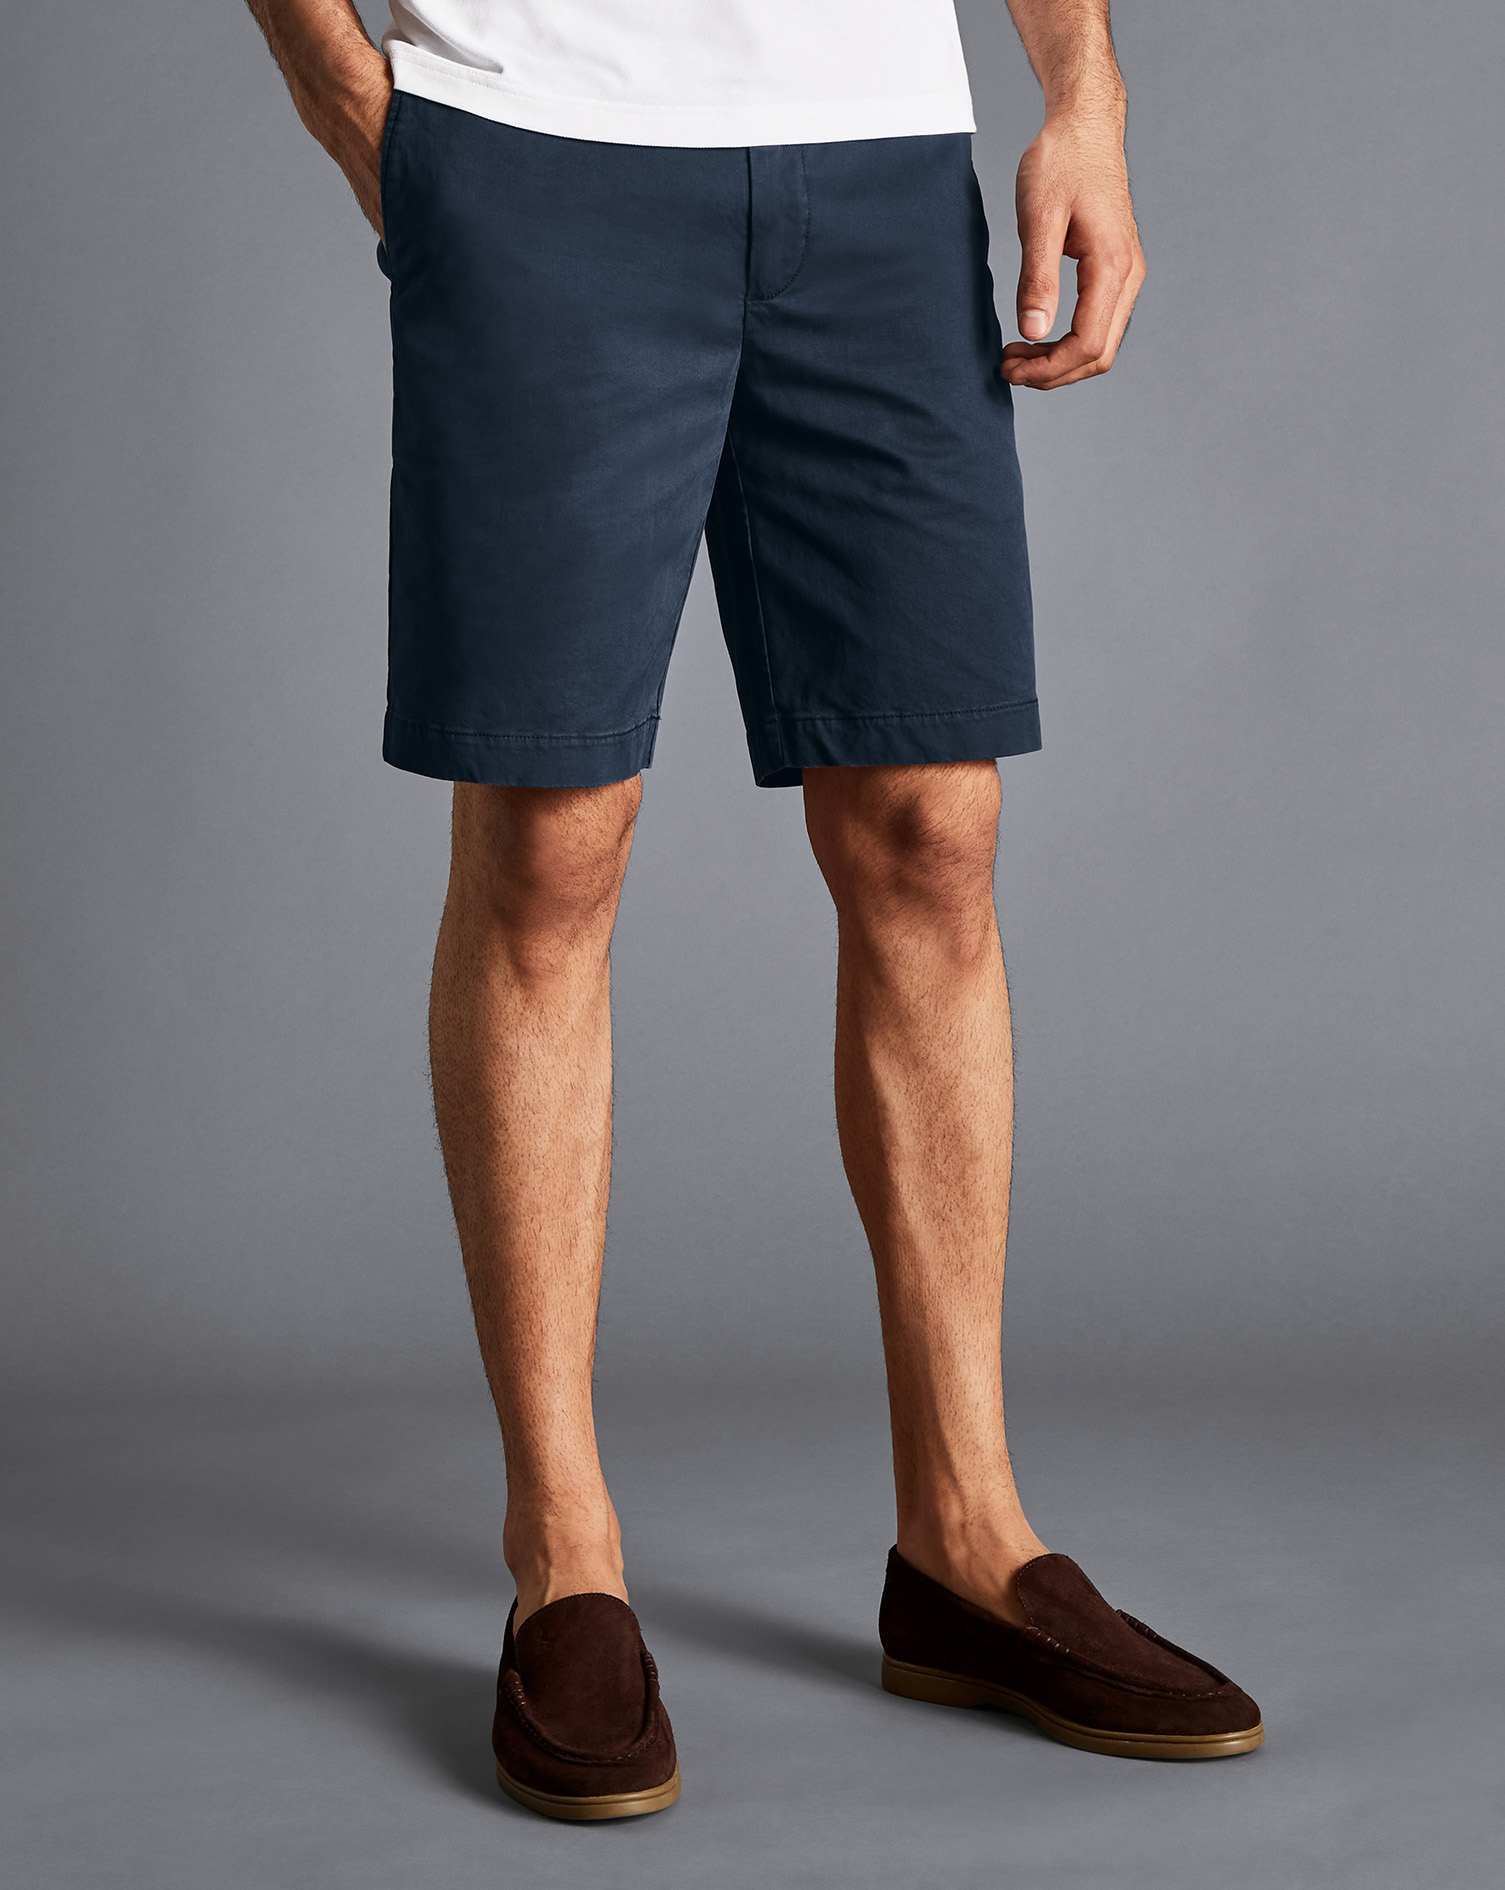 Cotton Shorts - Ink Blue Size 44
